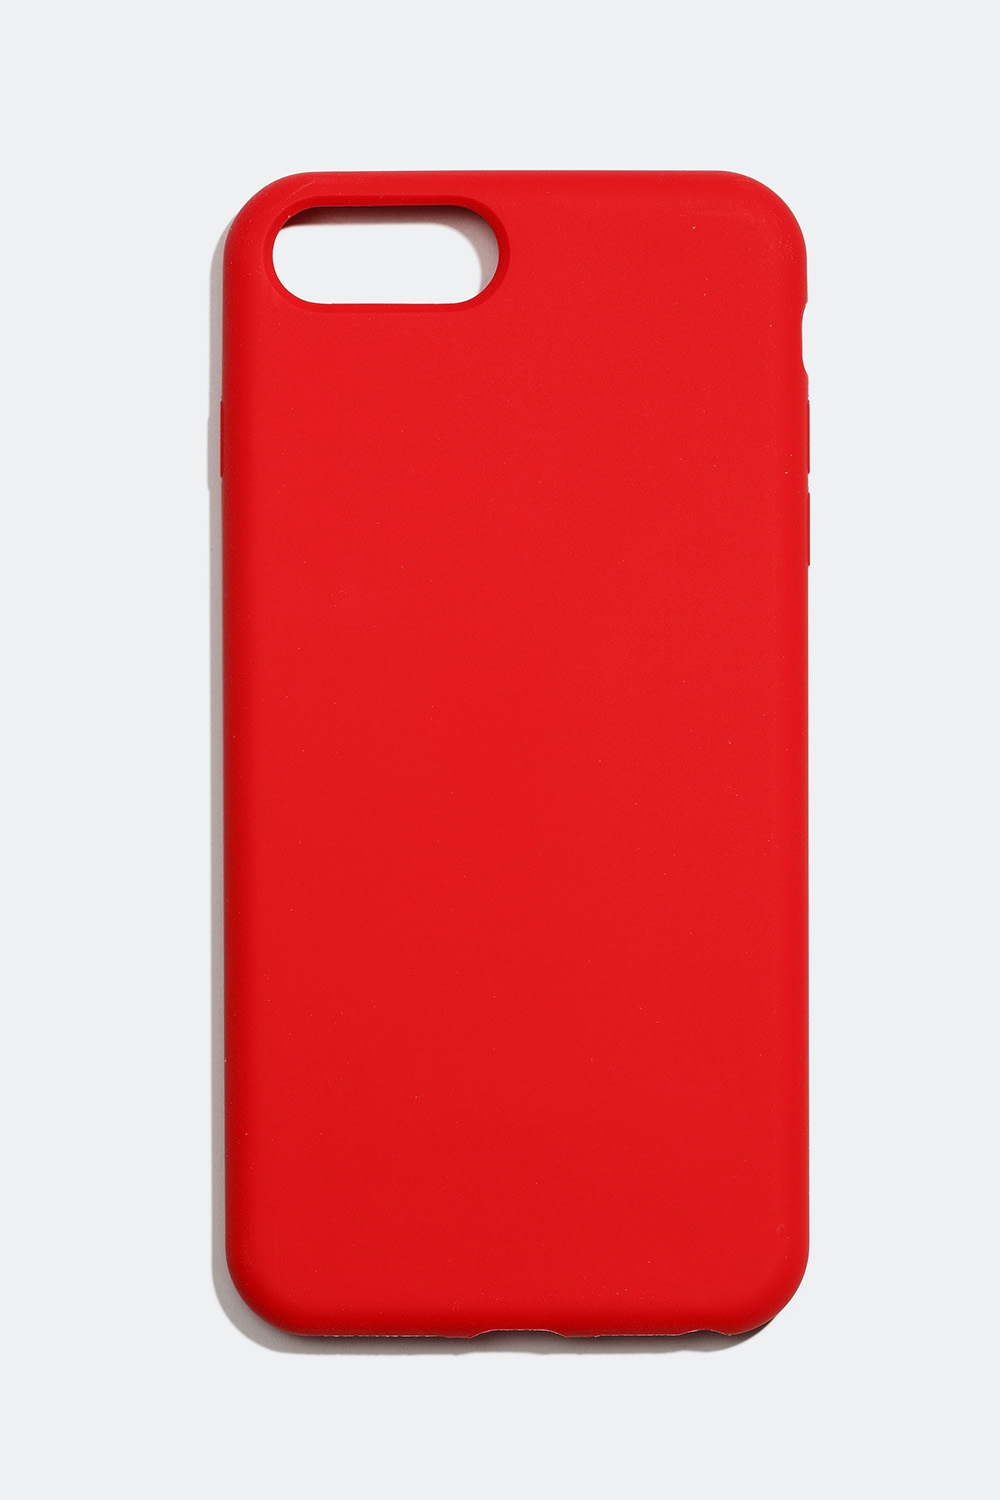 Telefoncover i mat rød – iPhone 6/7/8 plus i gruppen Tilbehør / Mobiltilbehør / Mobilcovers / iPhone 6 / 7 / 8 hos Glitter (174000356206)